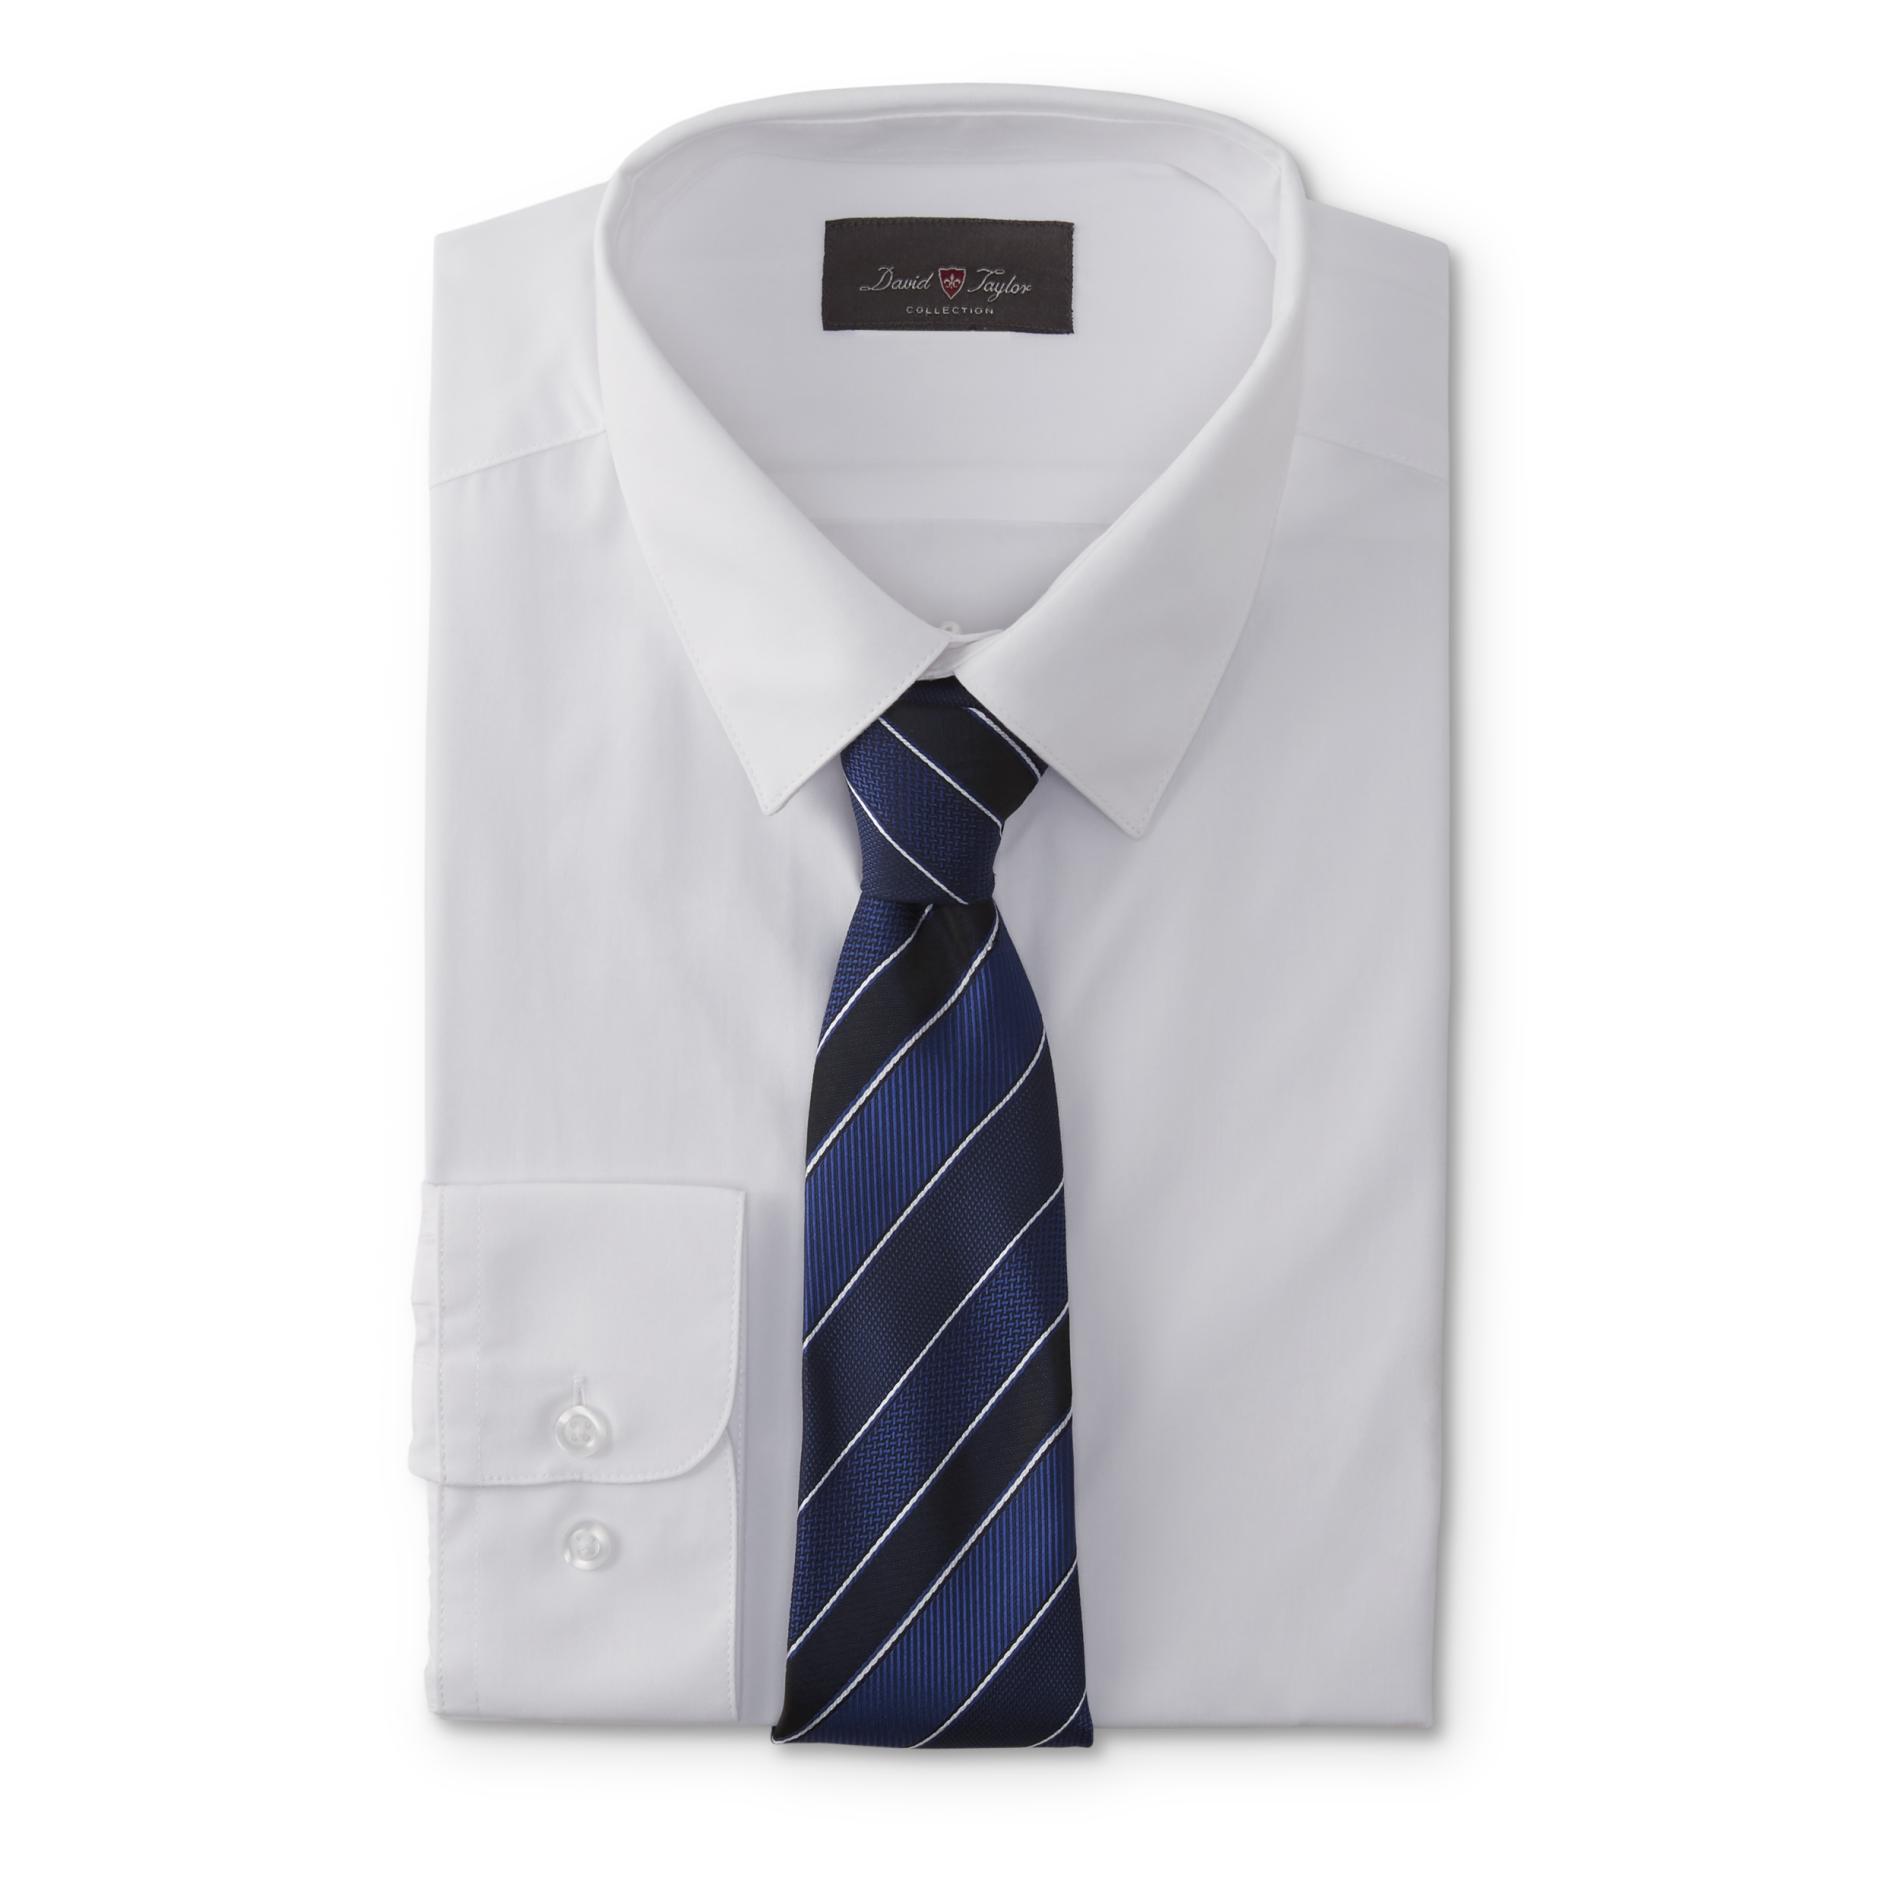 David Taylor Collection Men's Classic Fit Dress Shirt & Necktie - Striped